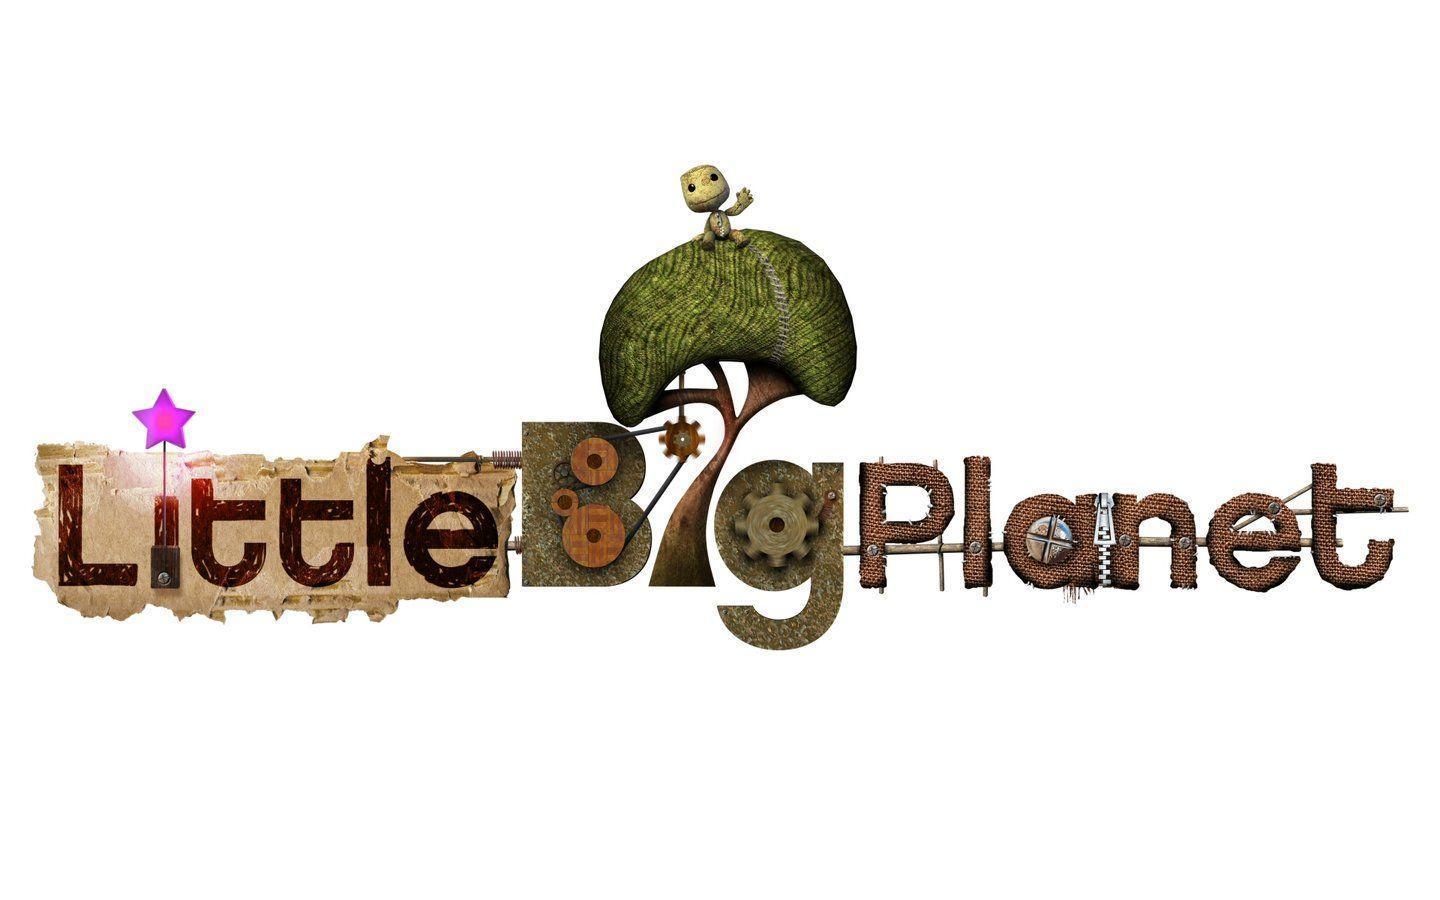 Wallpaper: LittleBigPlanet (3 of 6)